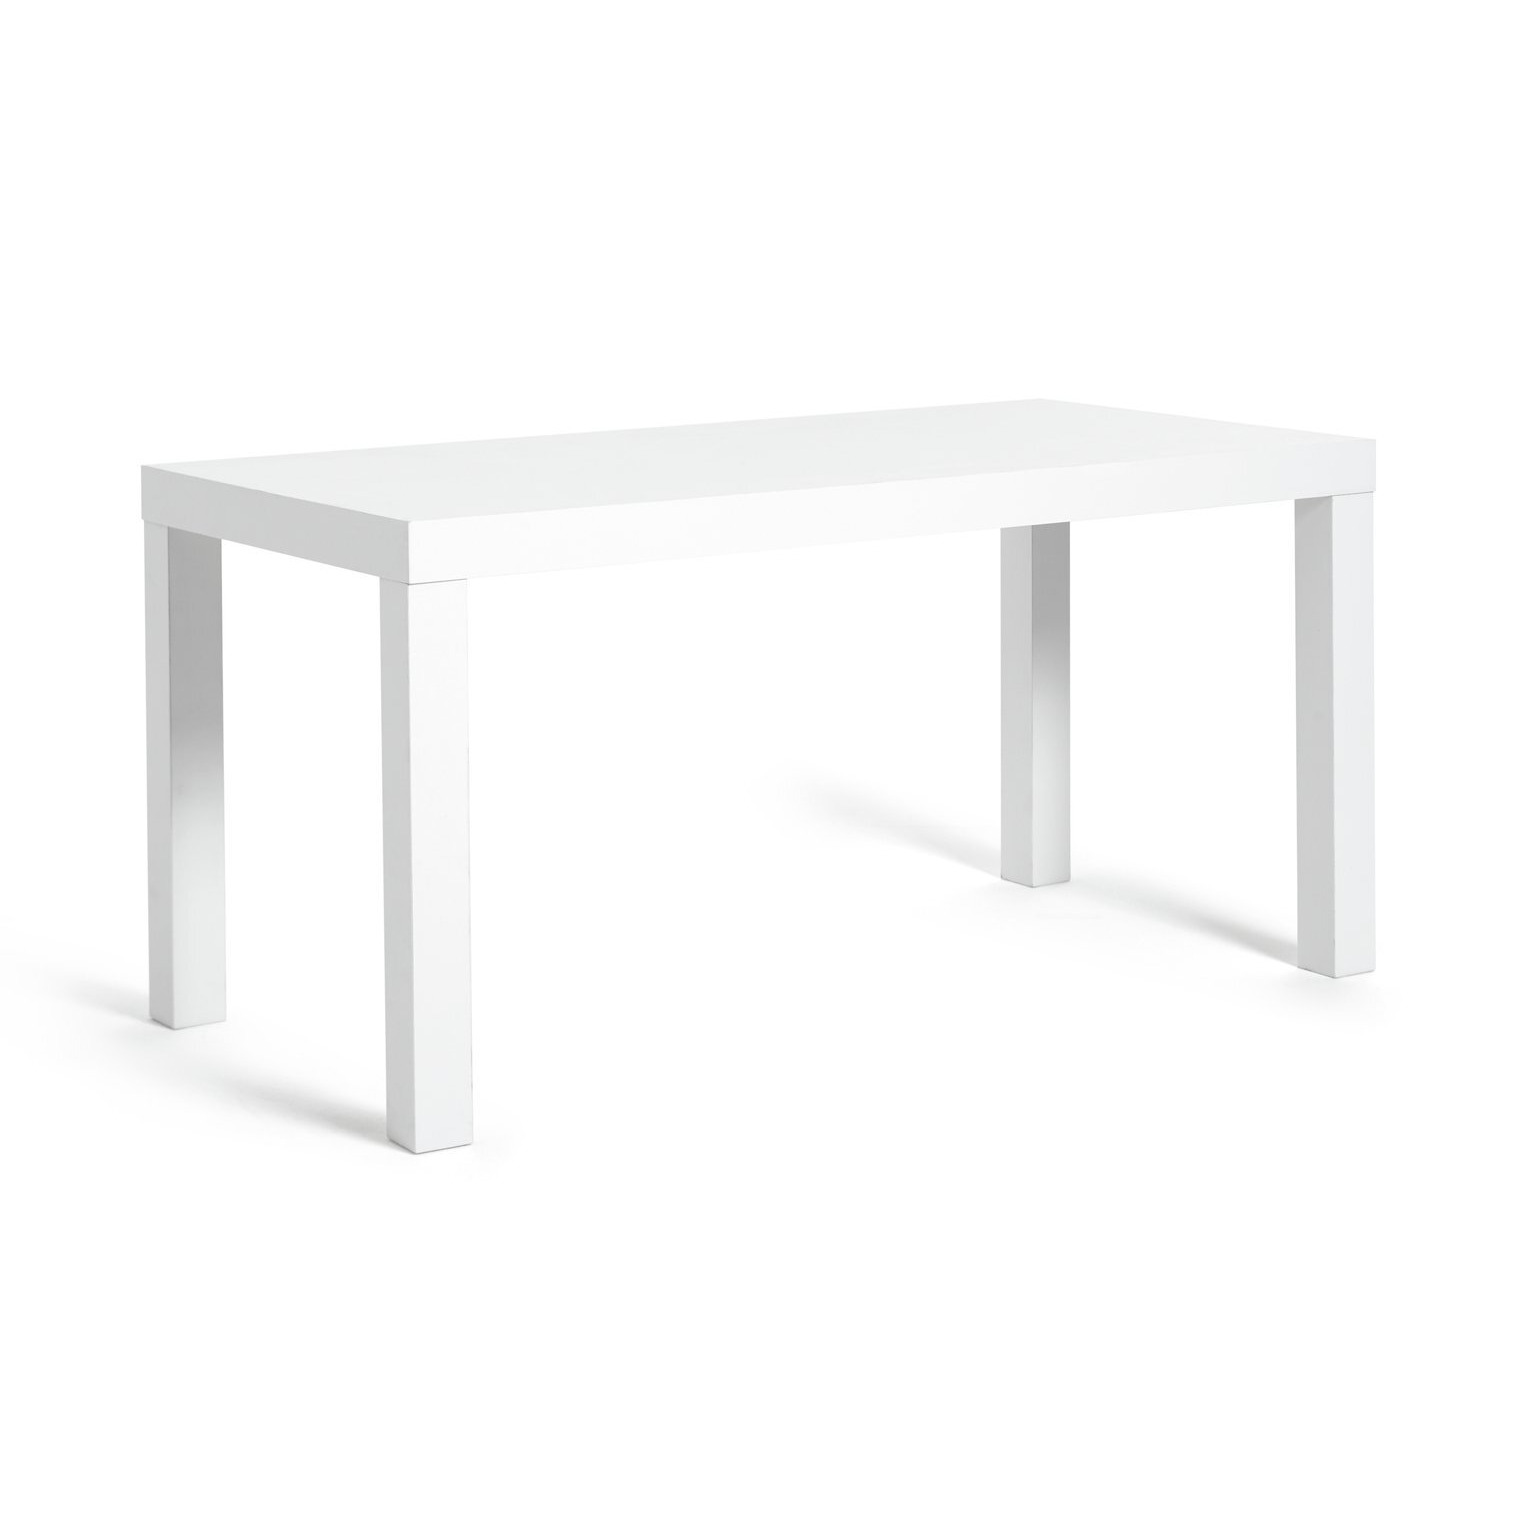 Habitat Coffee Table - White - image 1